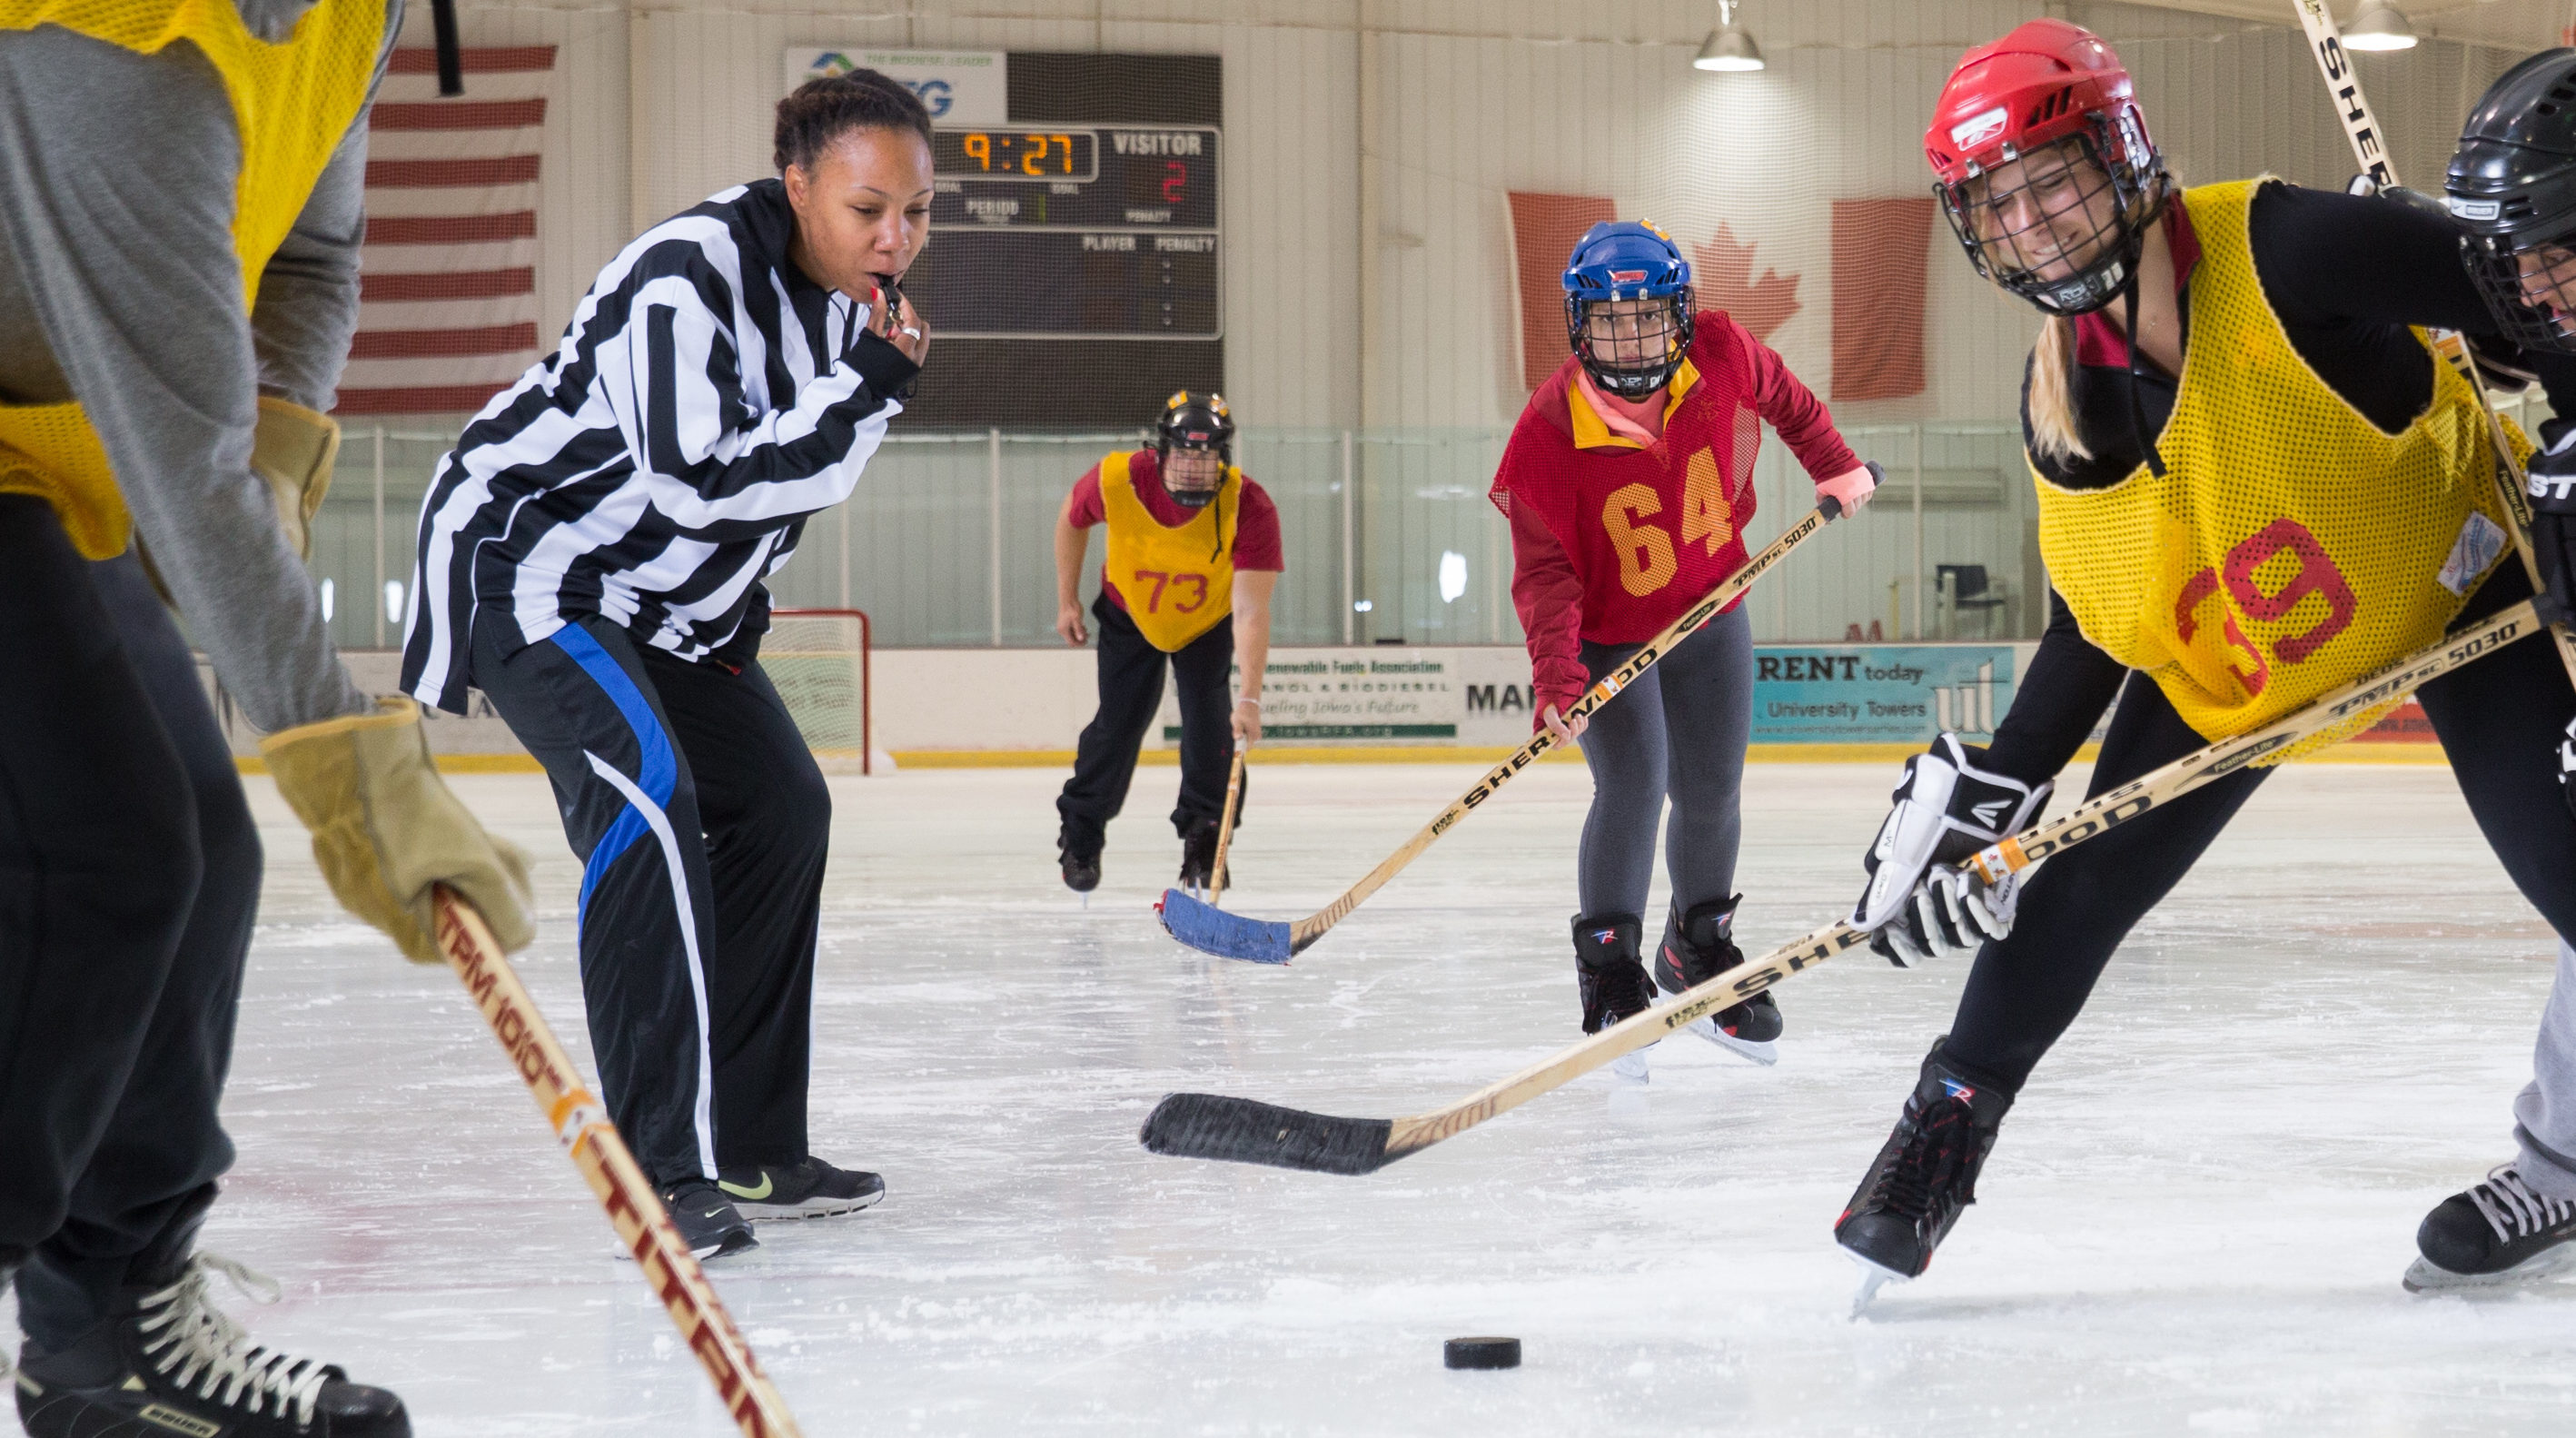 Students playing ice hockey